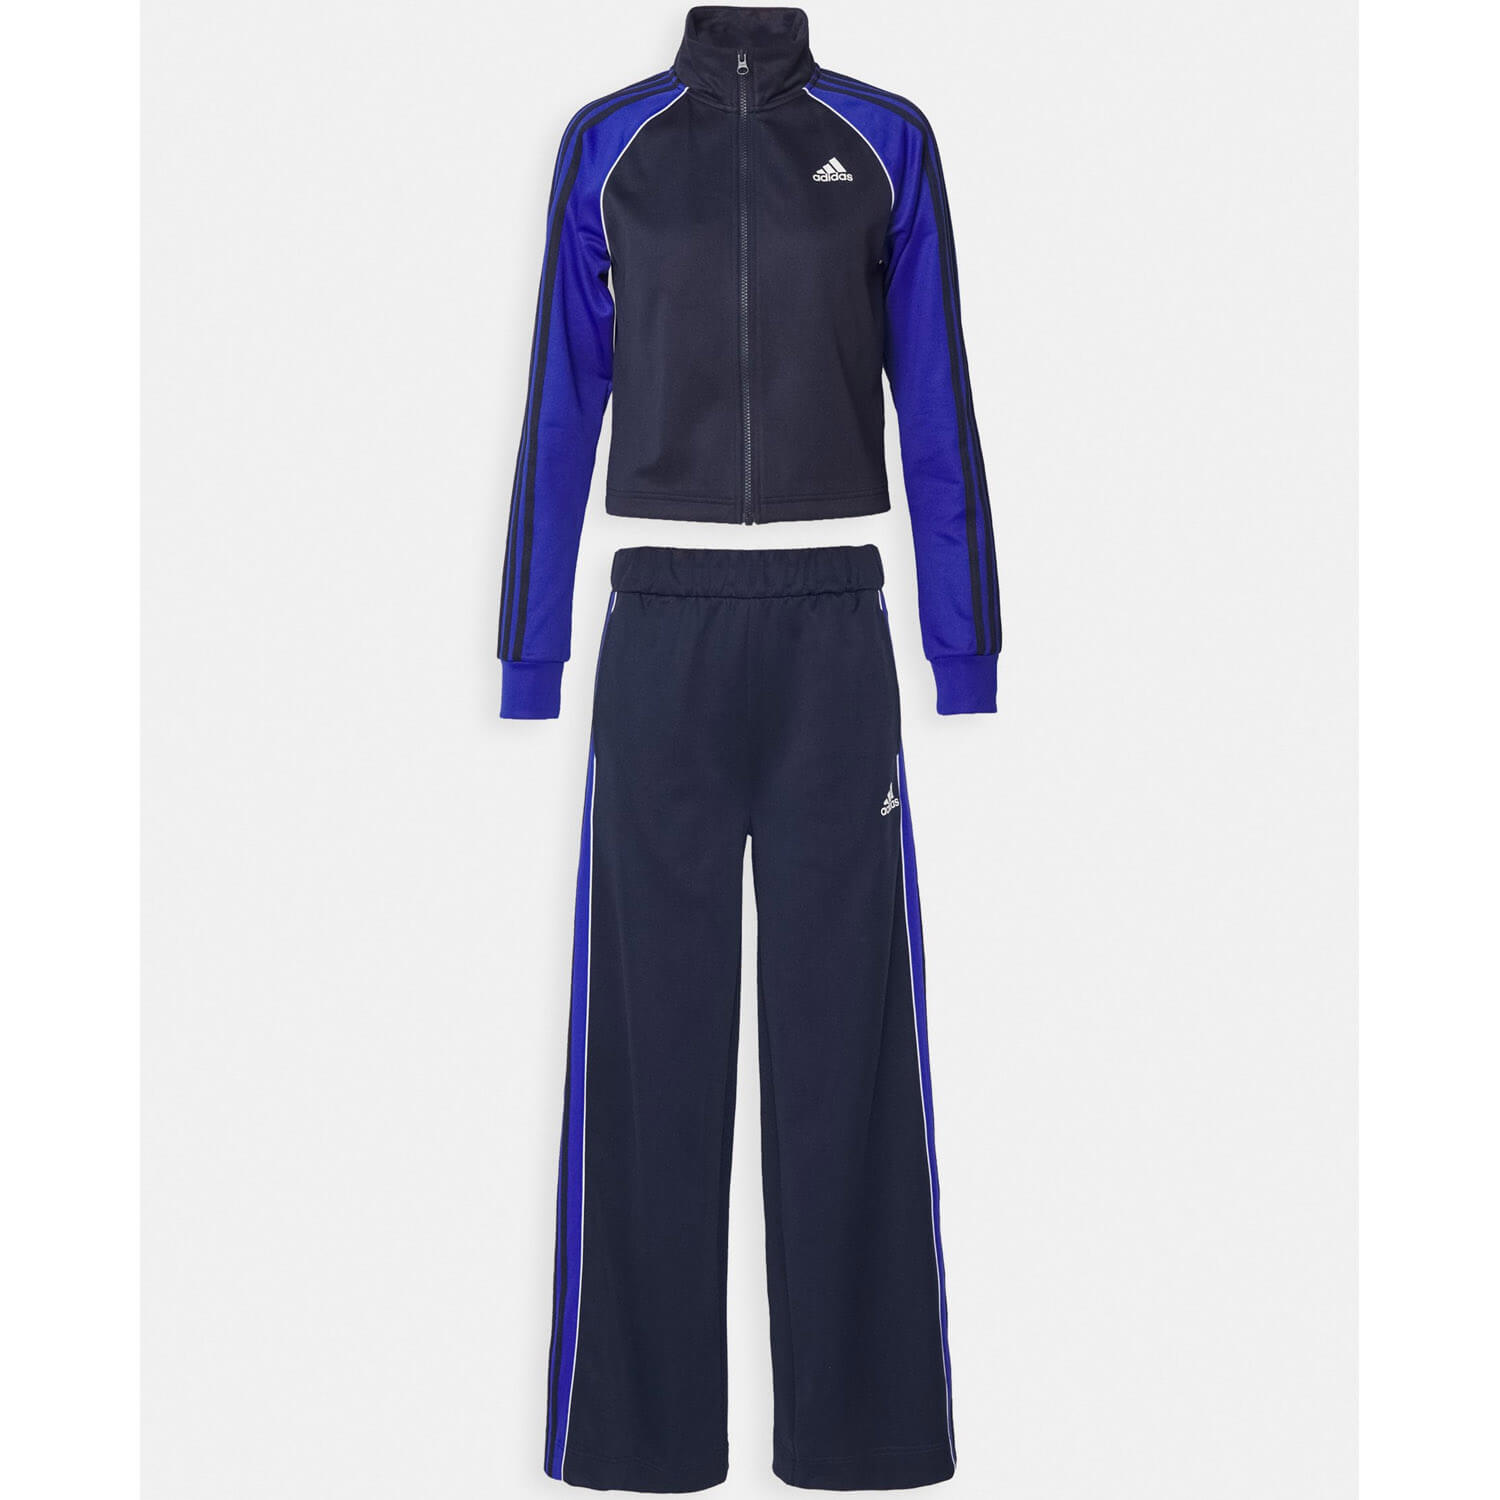 Спортивный костюм Adidas Teamsport, синий